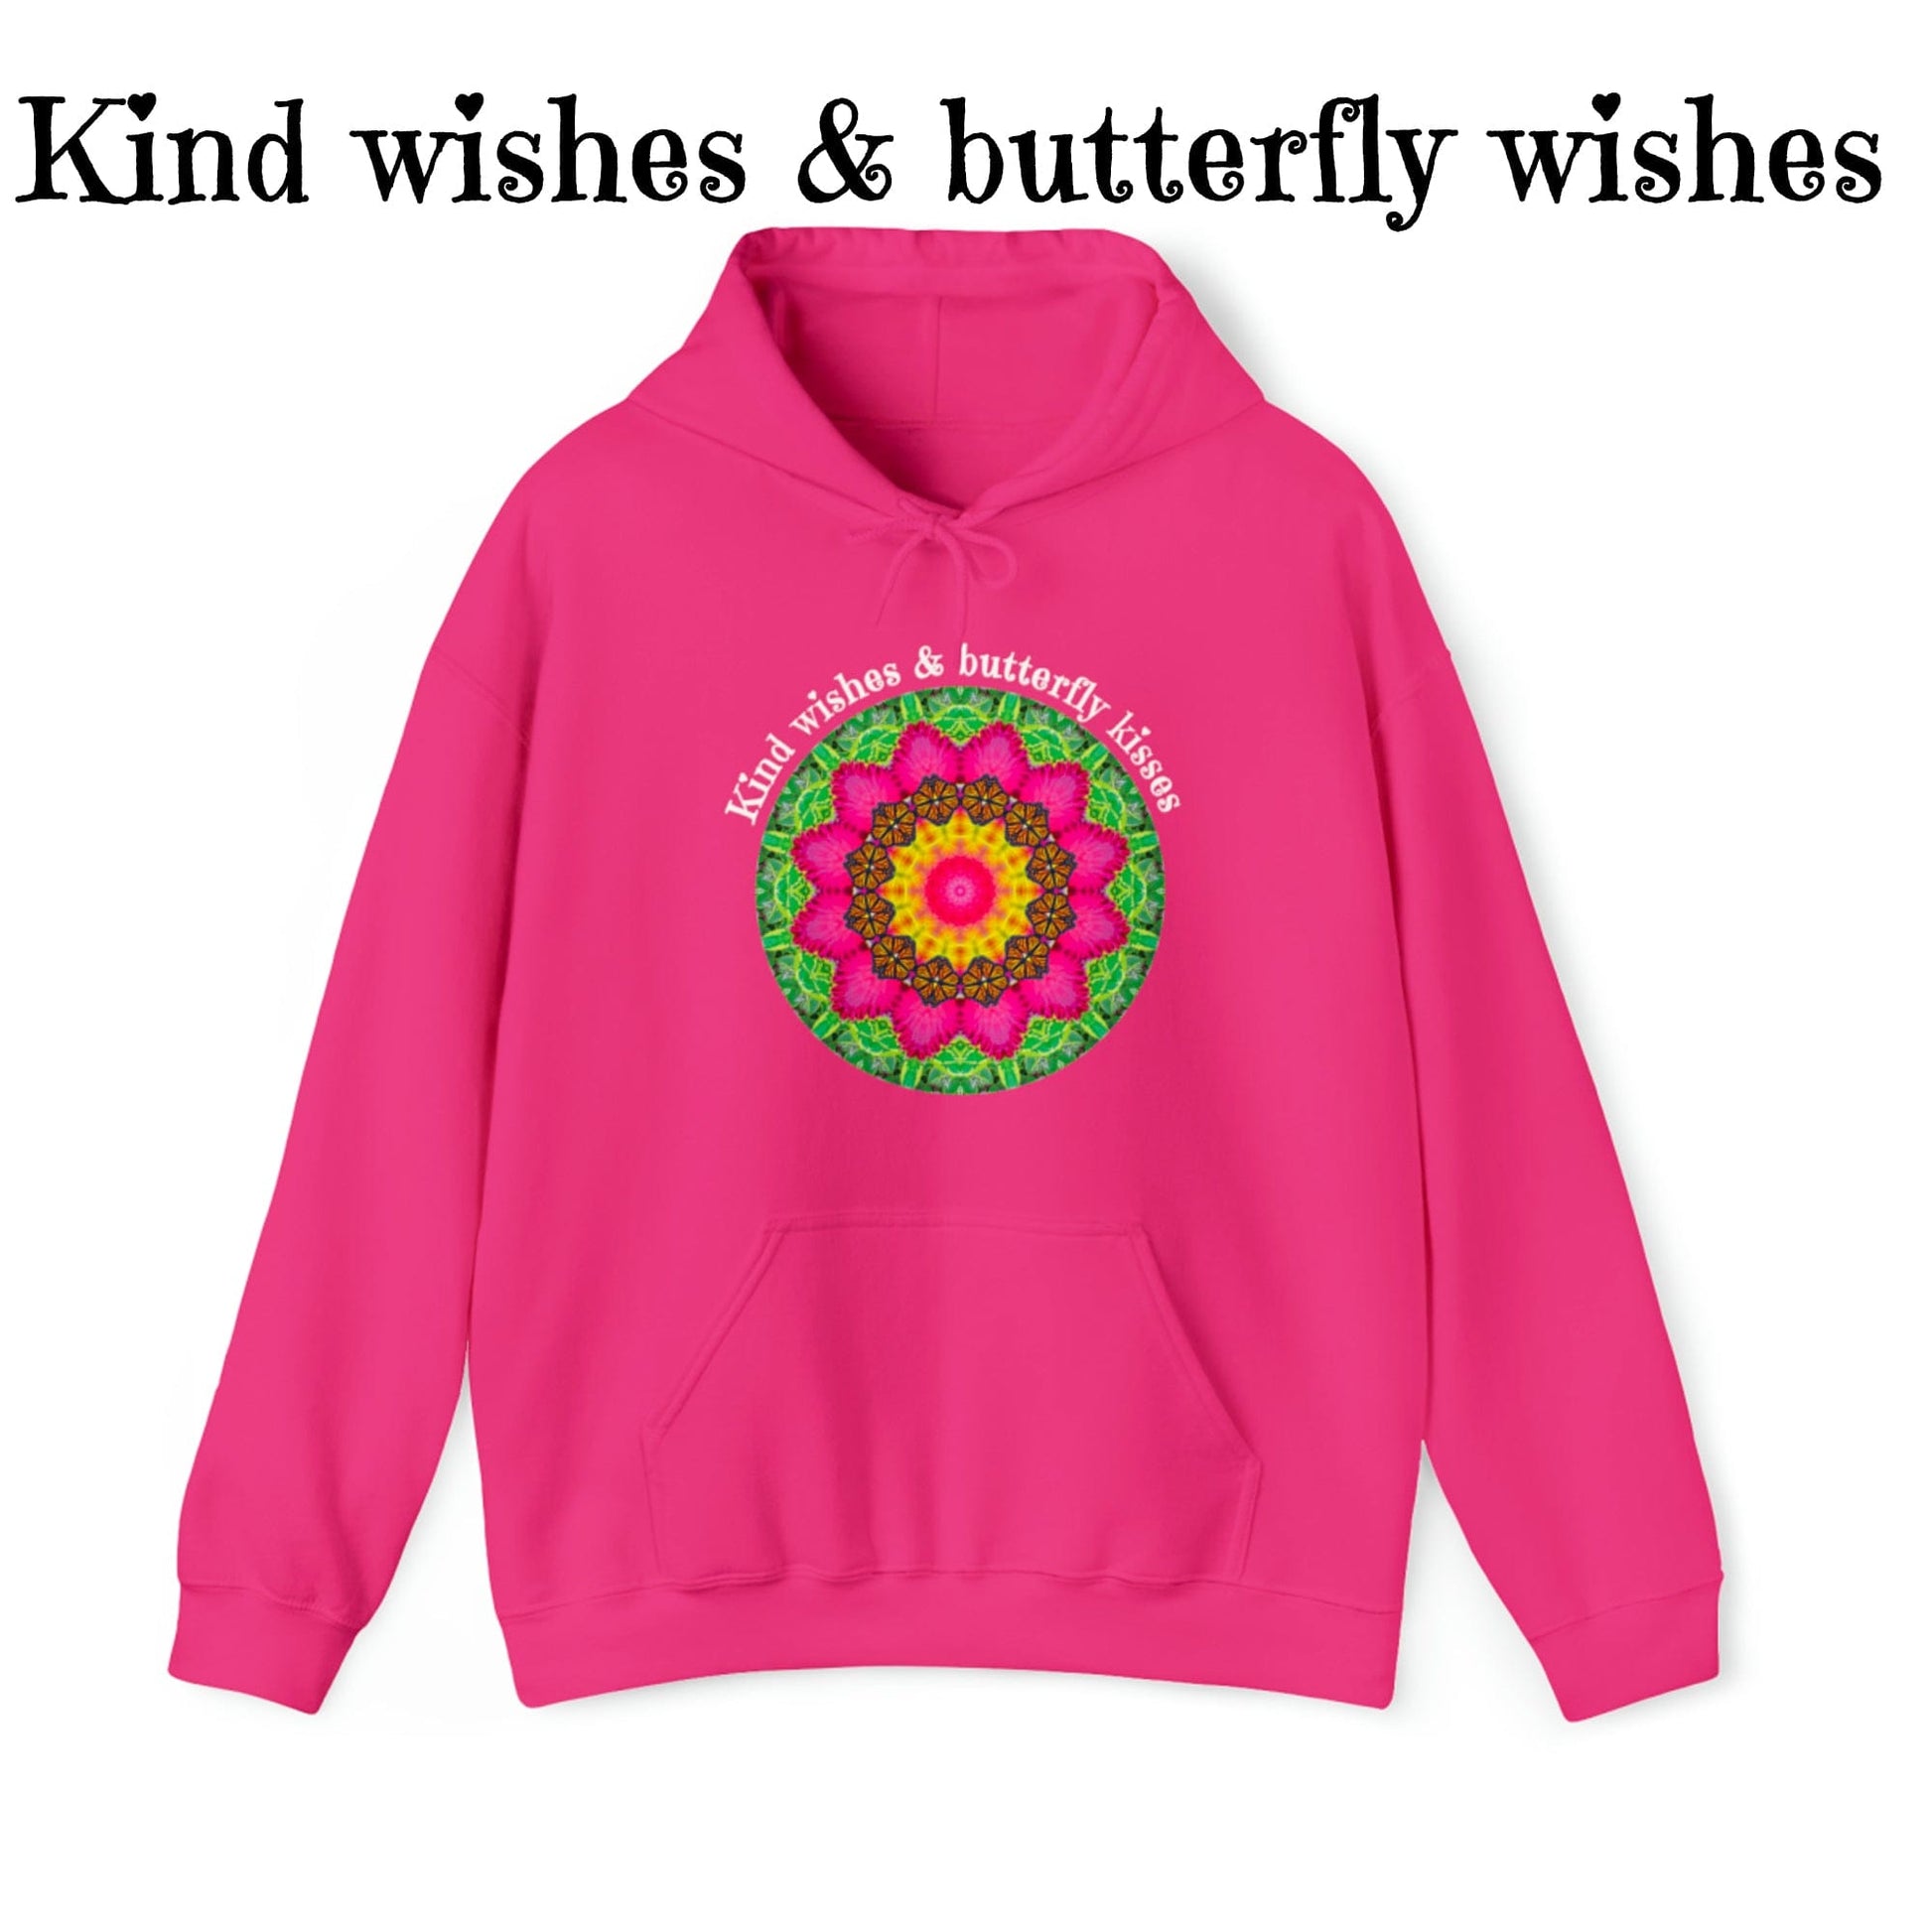 Pretty & Cute Butterfly Kindness Graphic Hoodie Sweatshirt Monarch Butterfly Mandala Art Kind wishes & butterfly kisses